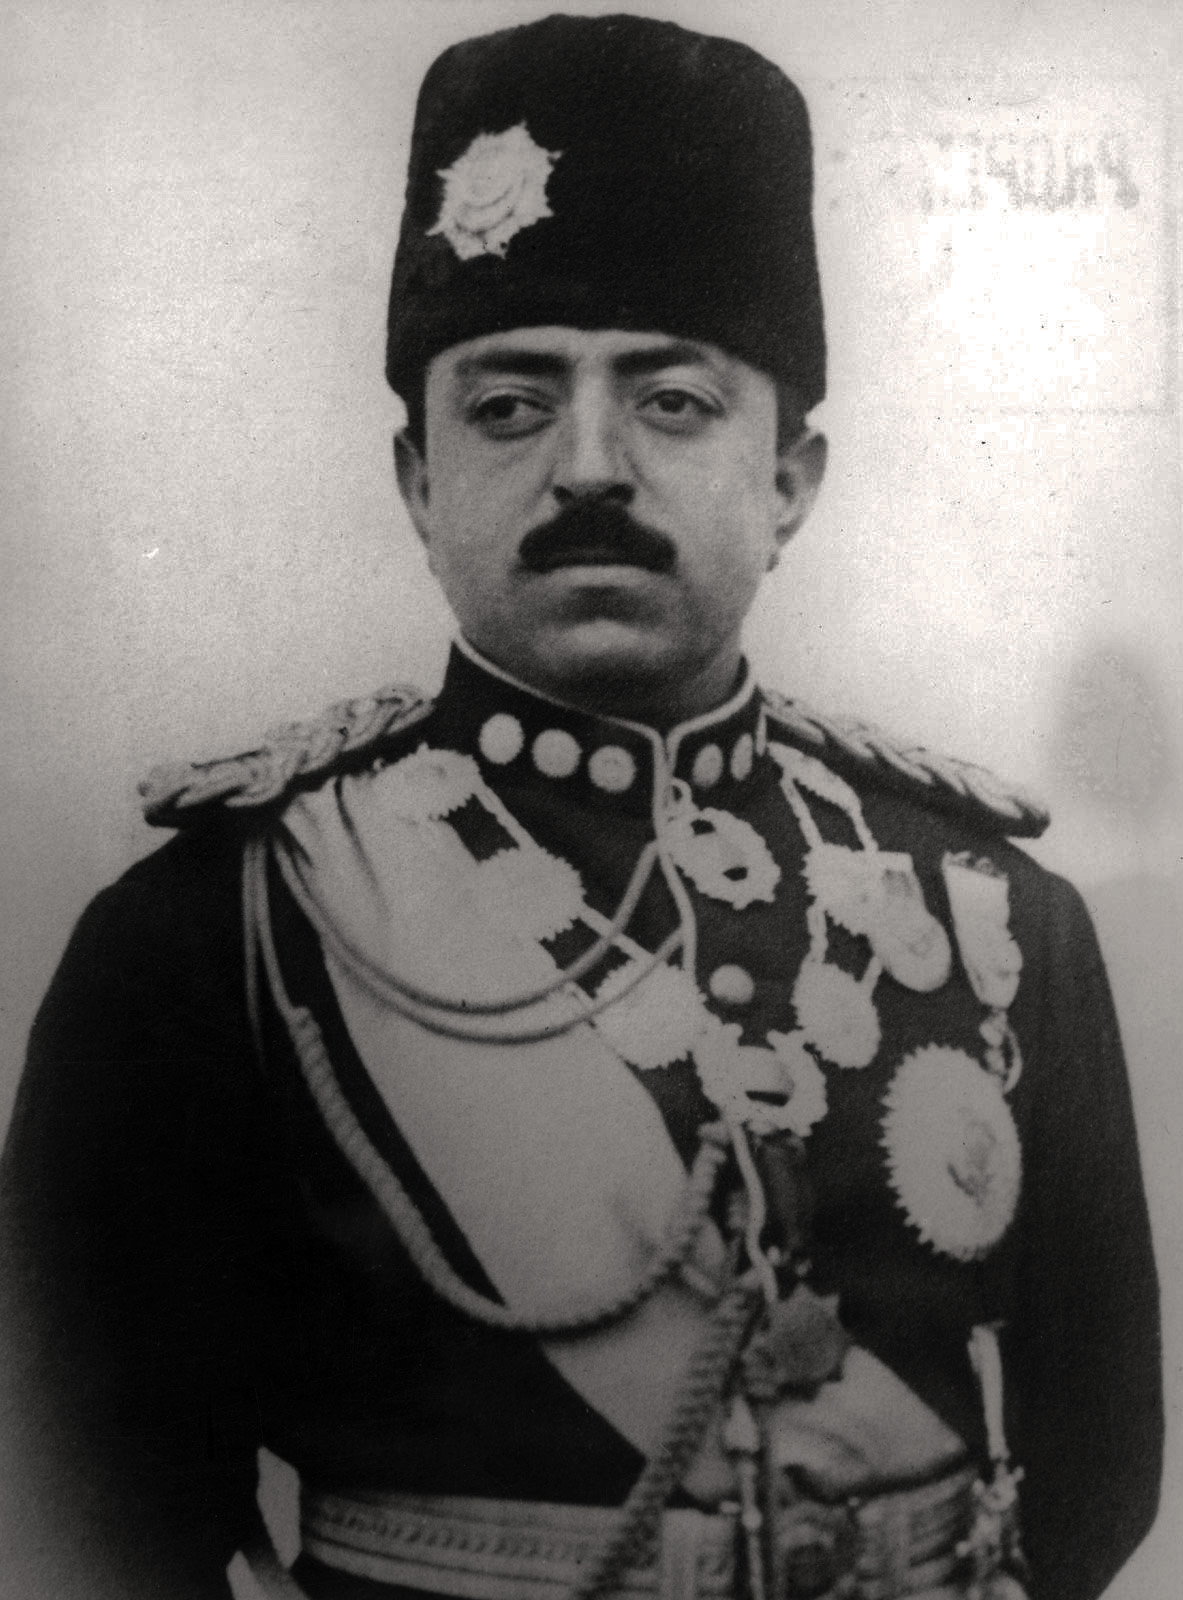 King Amanullah Khan of Afghanistan, photographed before 1930.